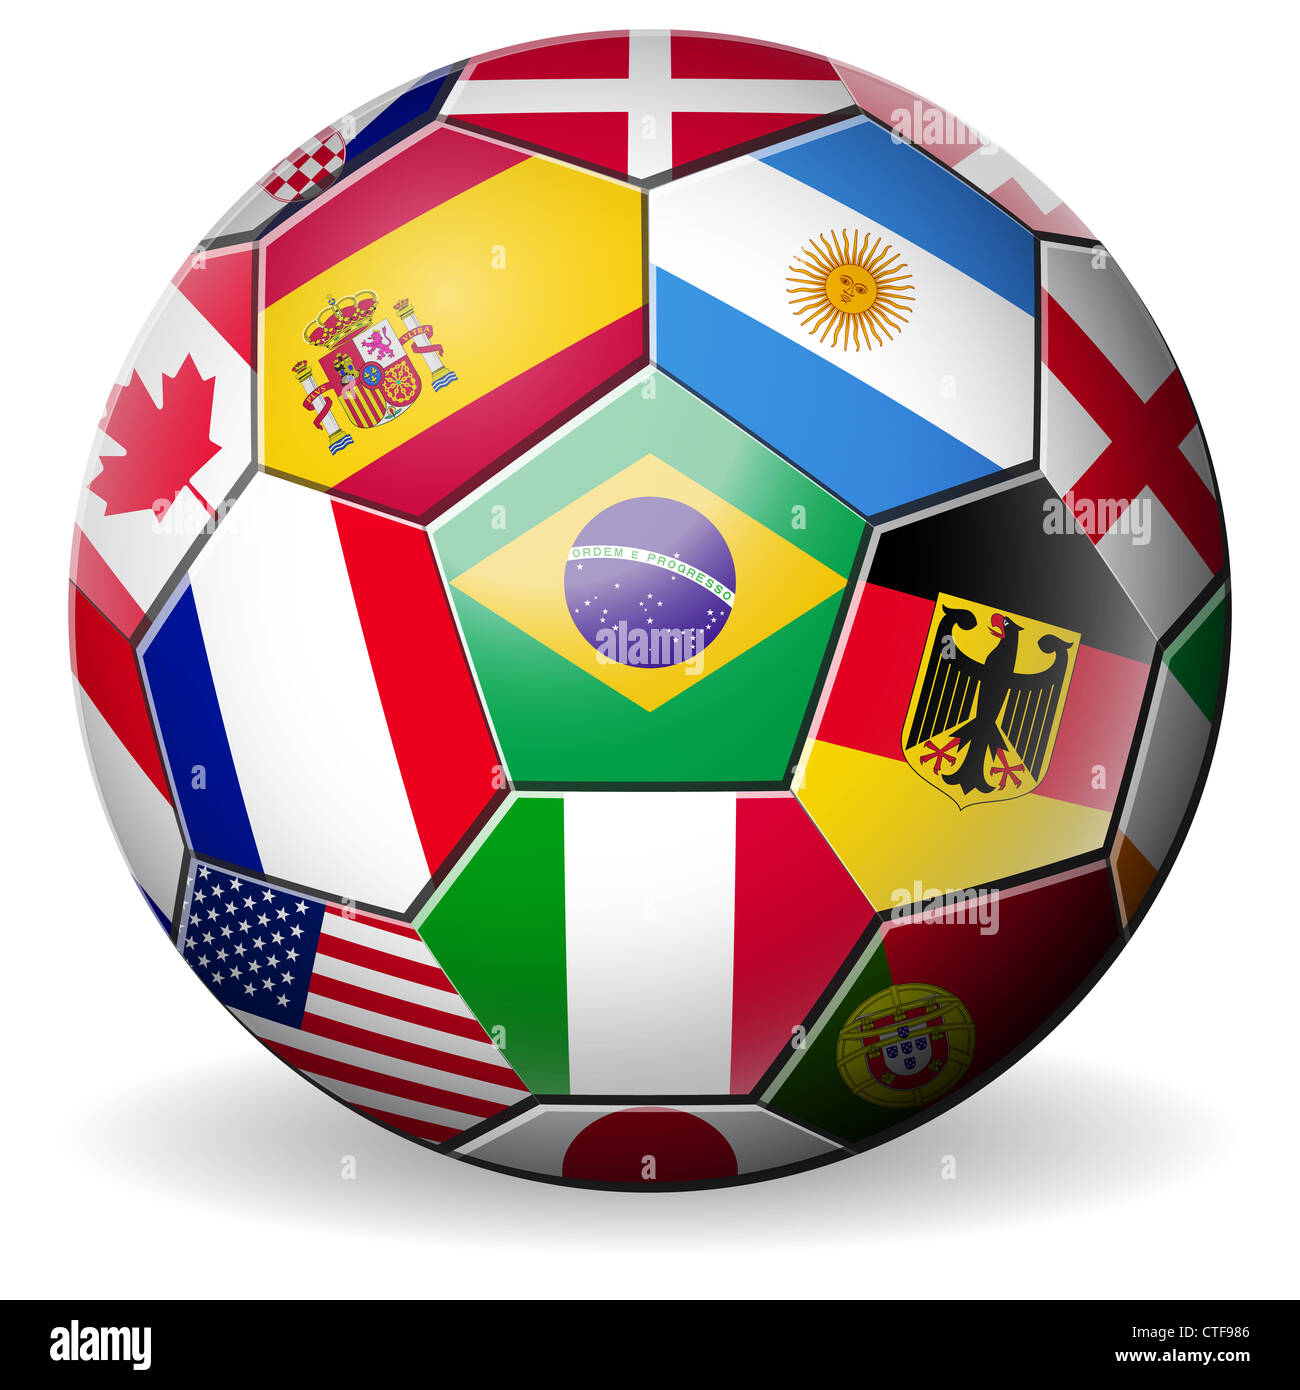 FIFA 2014 Brazil world cup Black MINI soccer ball size 2 sz flags international